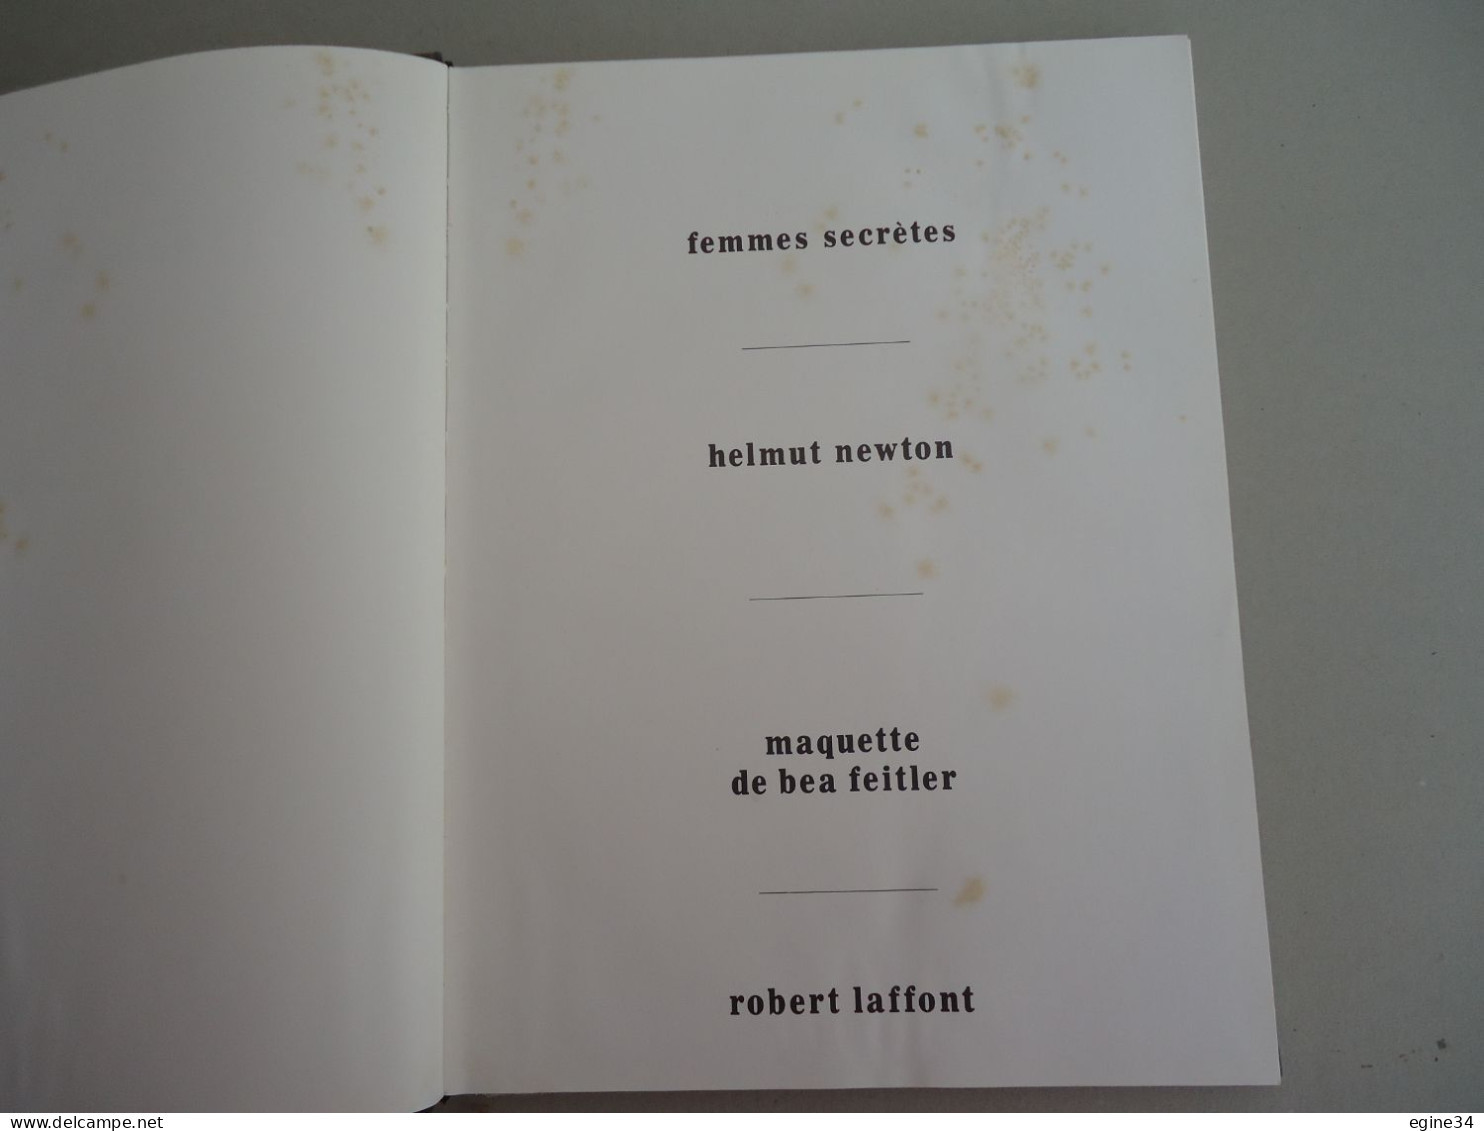 Editions R. Laffont - Helmut Newton - Femmes Secrètes - 1976 - Texte Philippe Garner - Fotografie